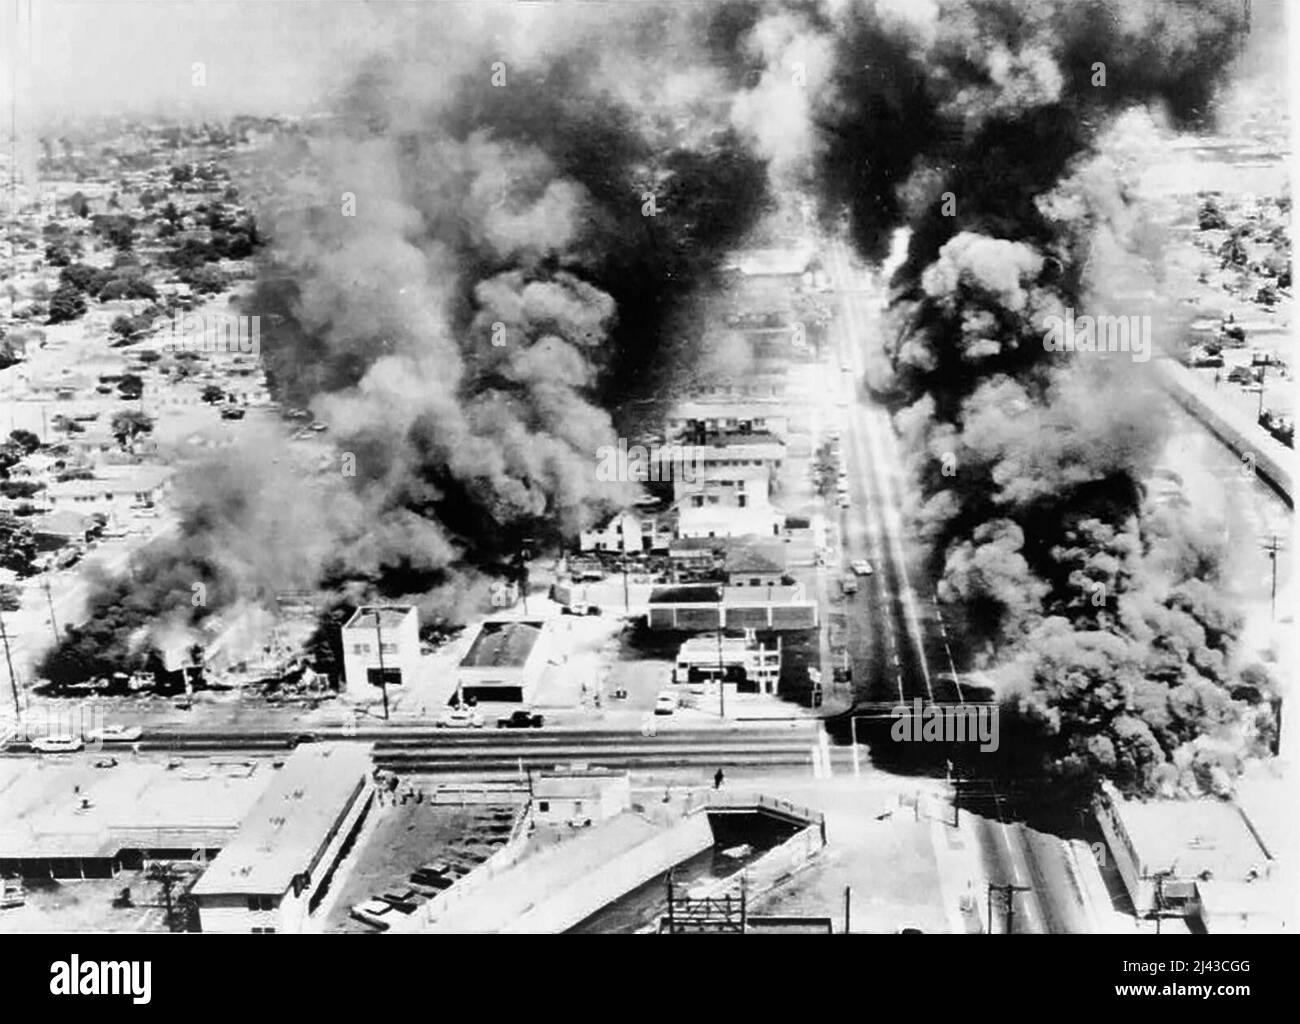 Bâtiments en feu pendant les émeutes de Watts, août 1965 Banque D'Images